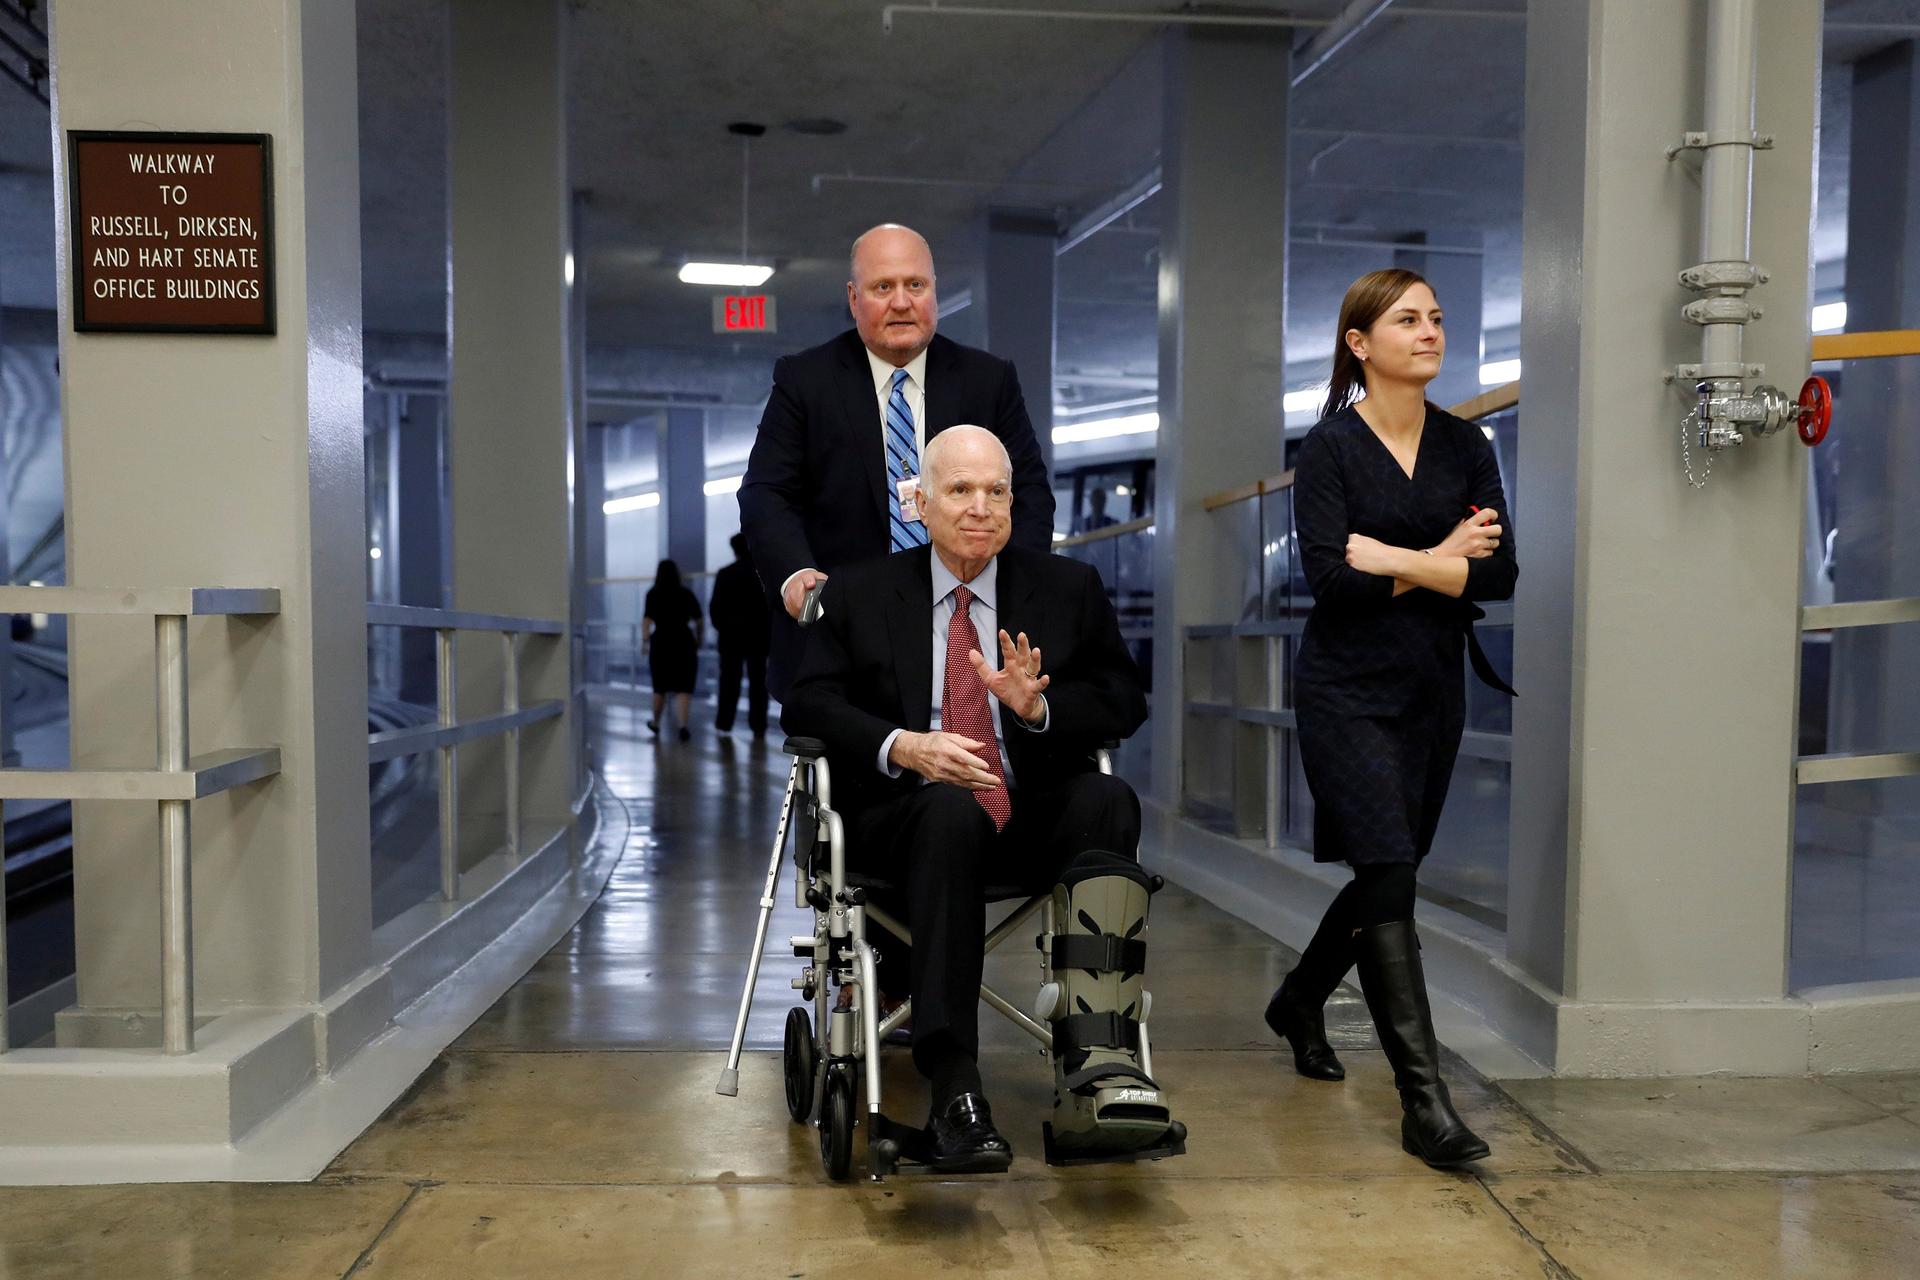 Senator John McCain sitting in a wheelchair, smiling and waving